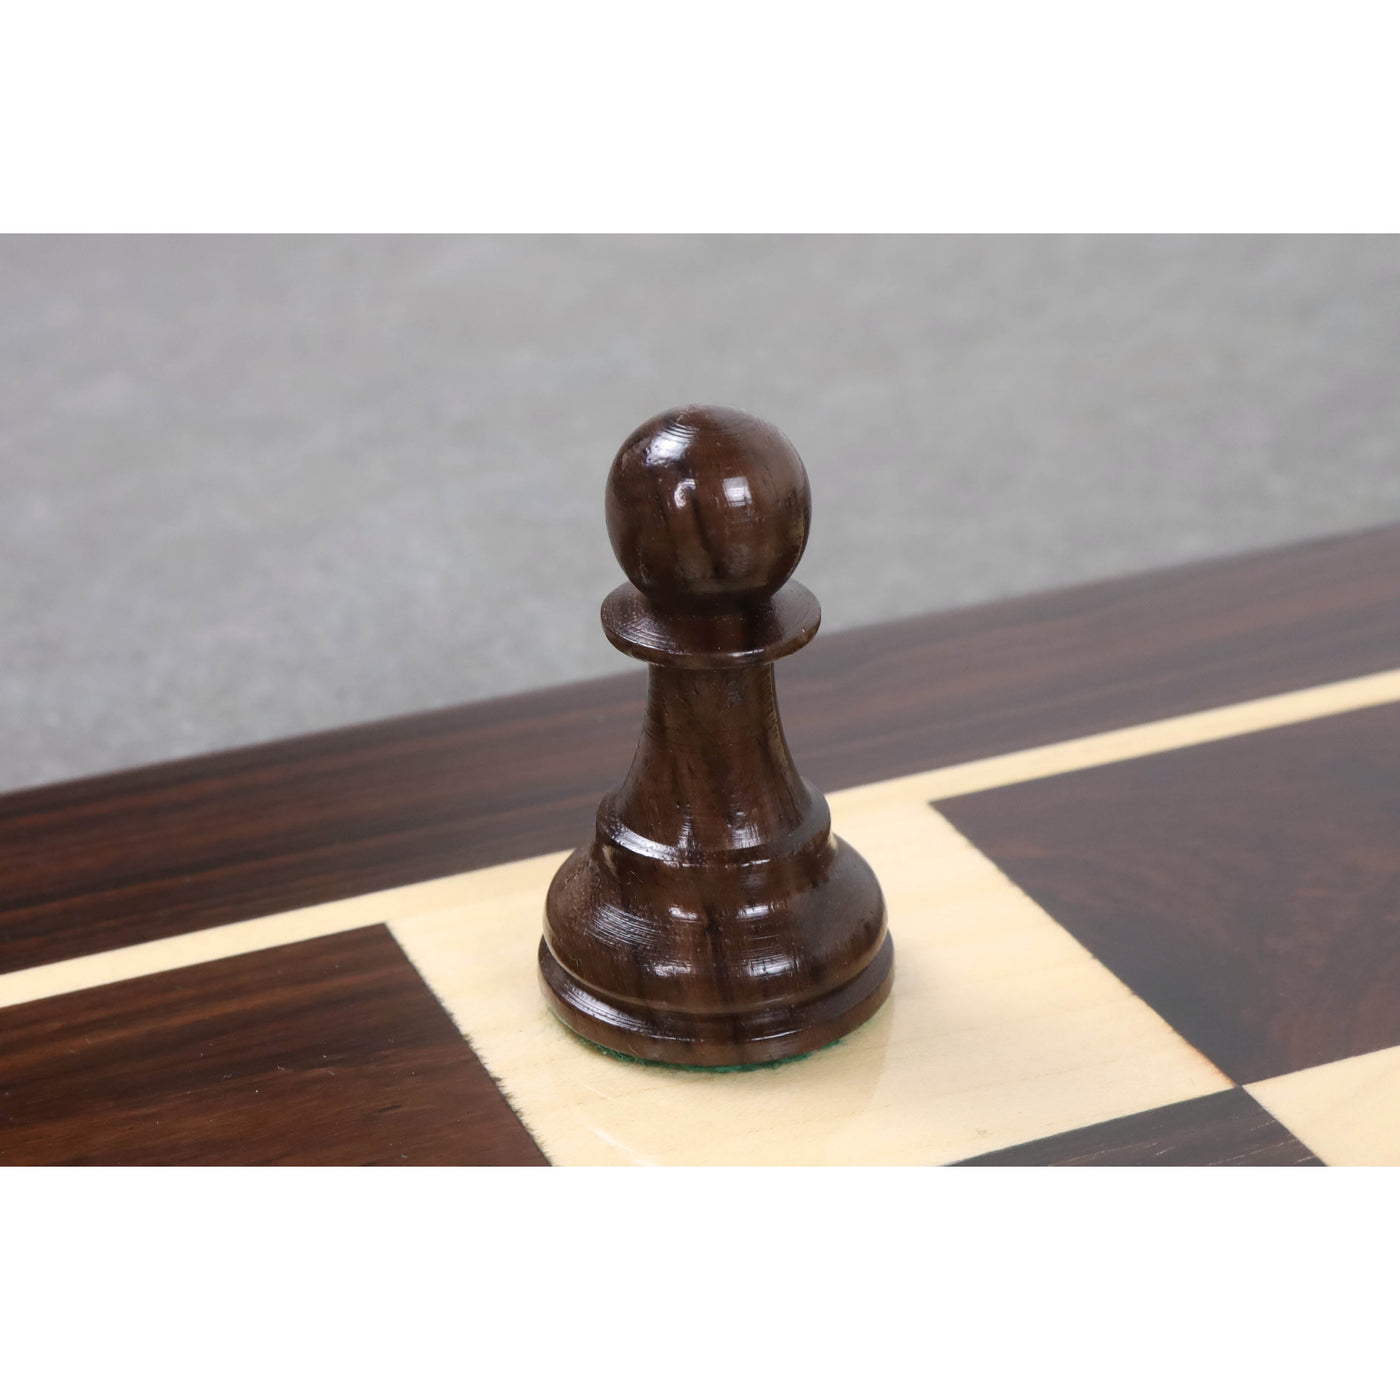 Leningrad Staunton Chess Set - Chess Pieces Only - Rosewood & Boxwood - 4" King